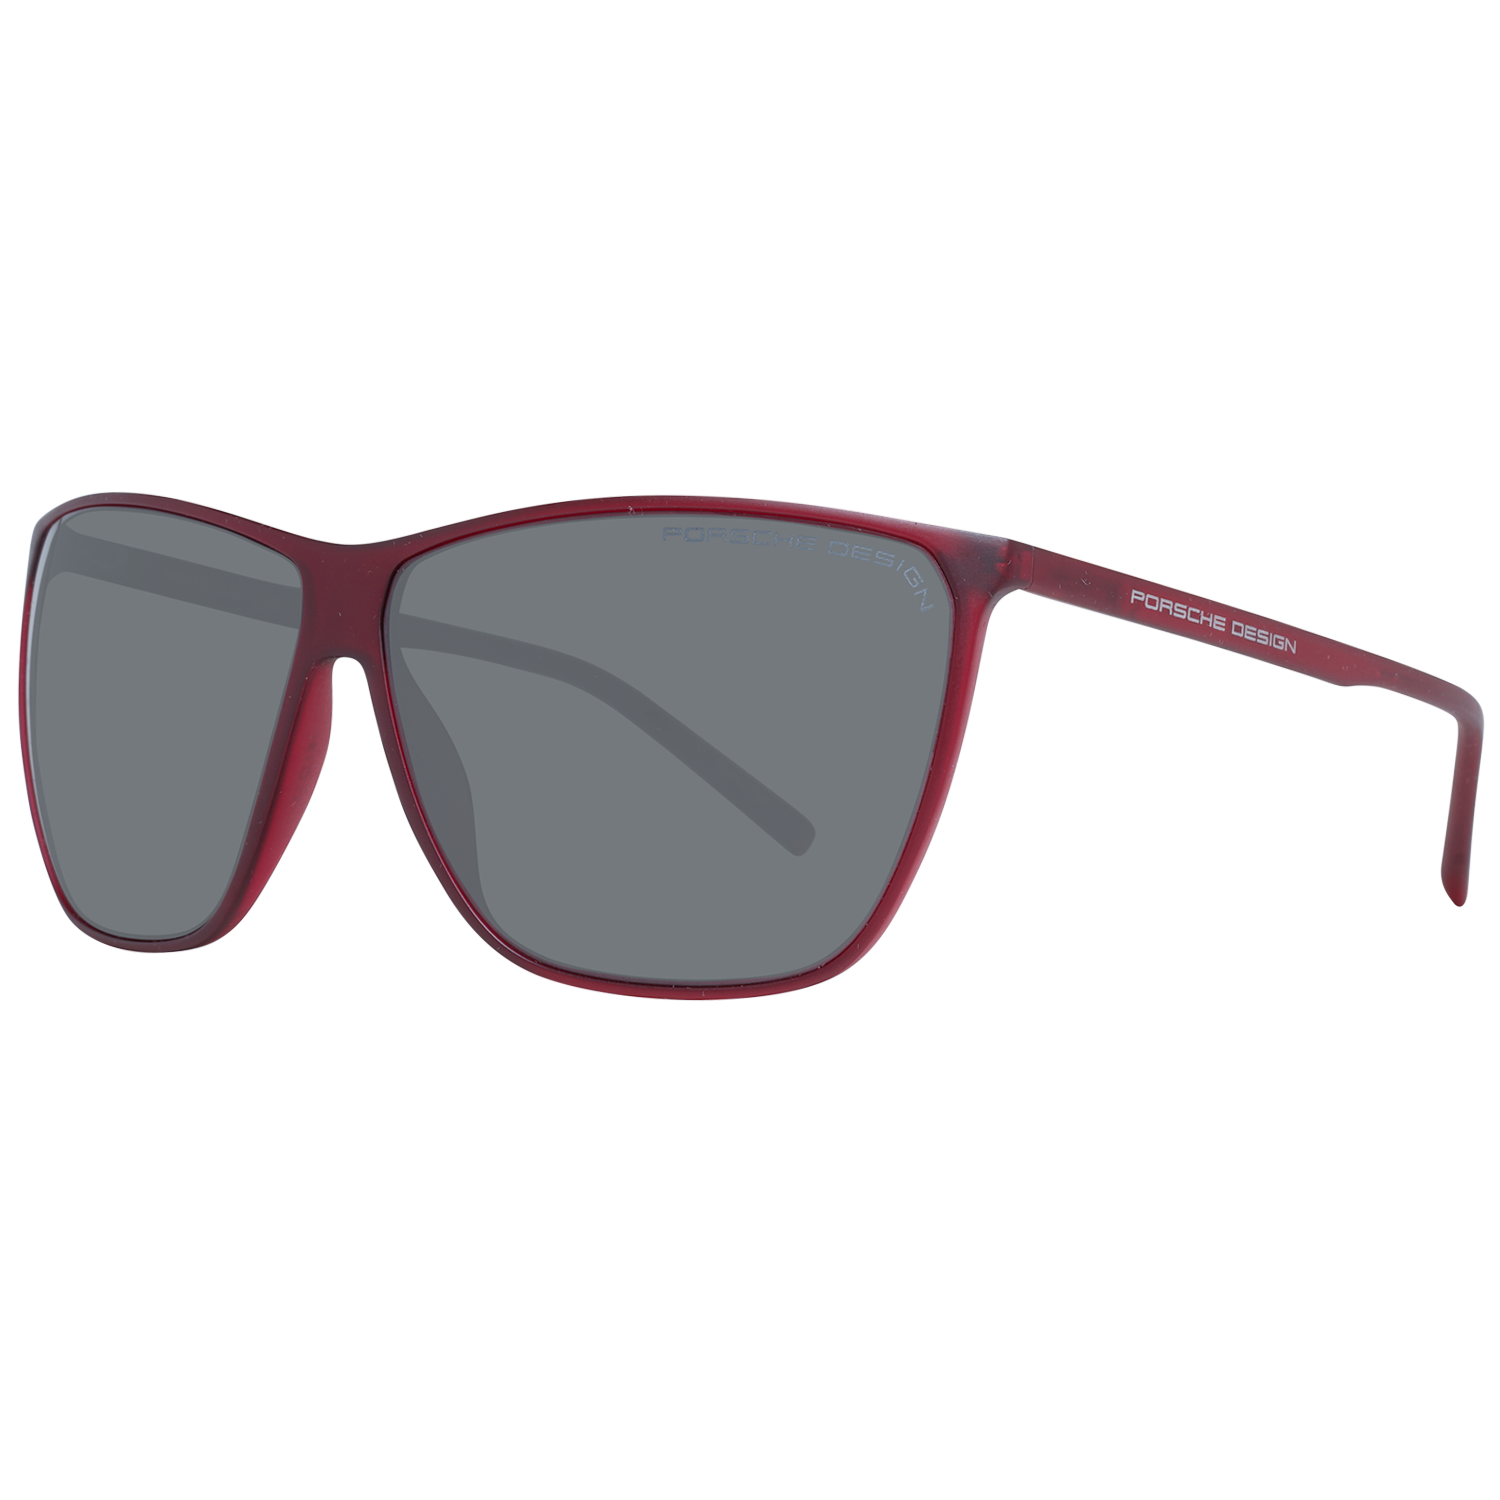 Porsche Design Sunglasses Porsche Design Sunglasses P8612 D 61mm Eyeglasses Eyewear UK USA Australia 